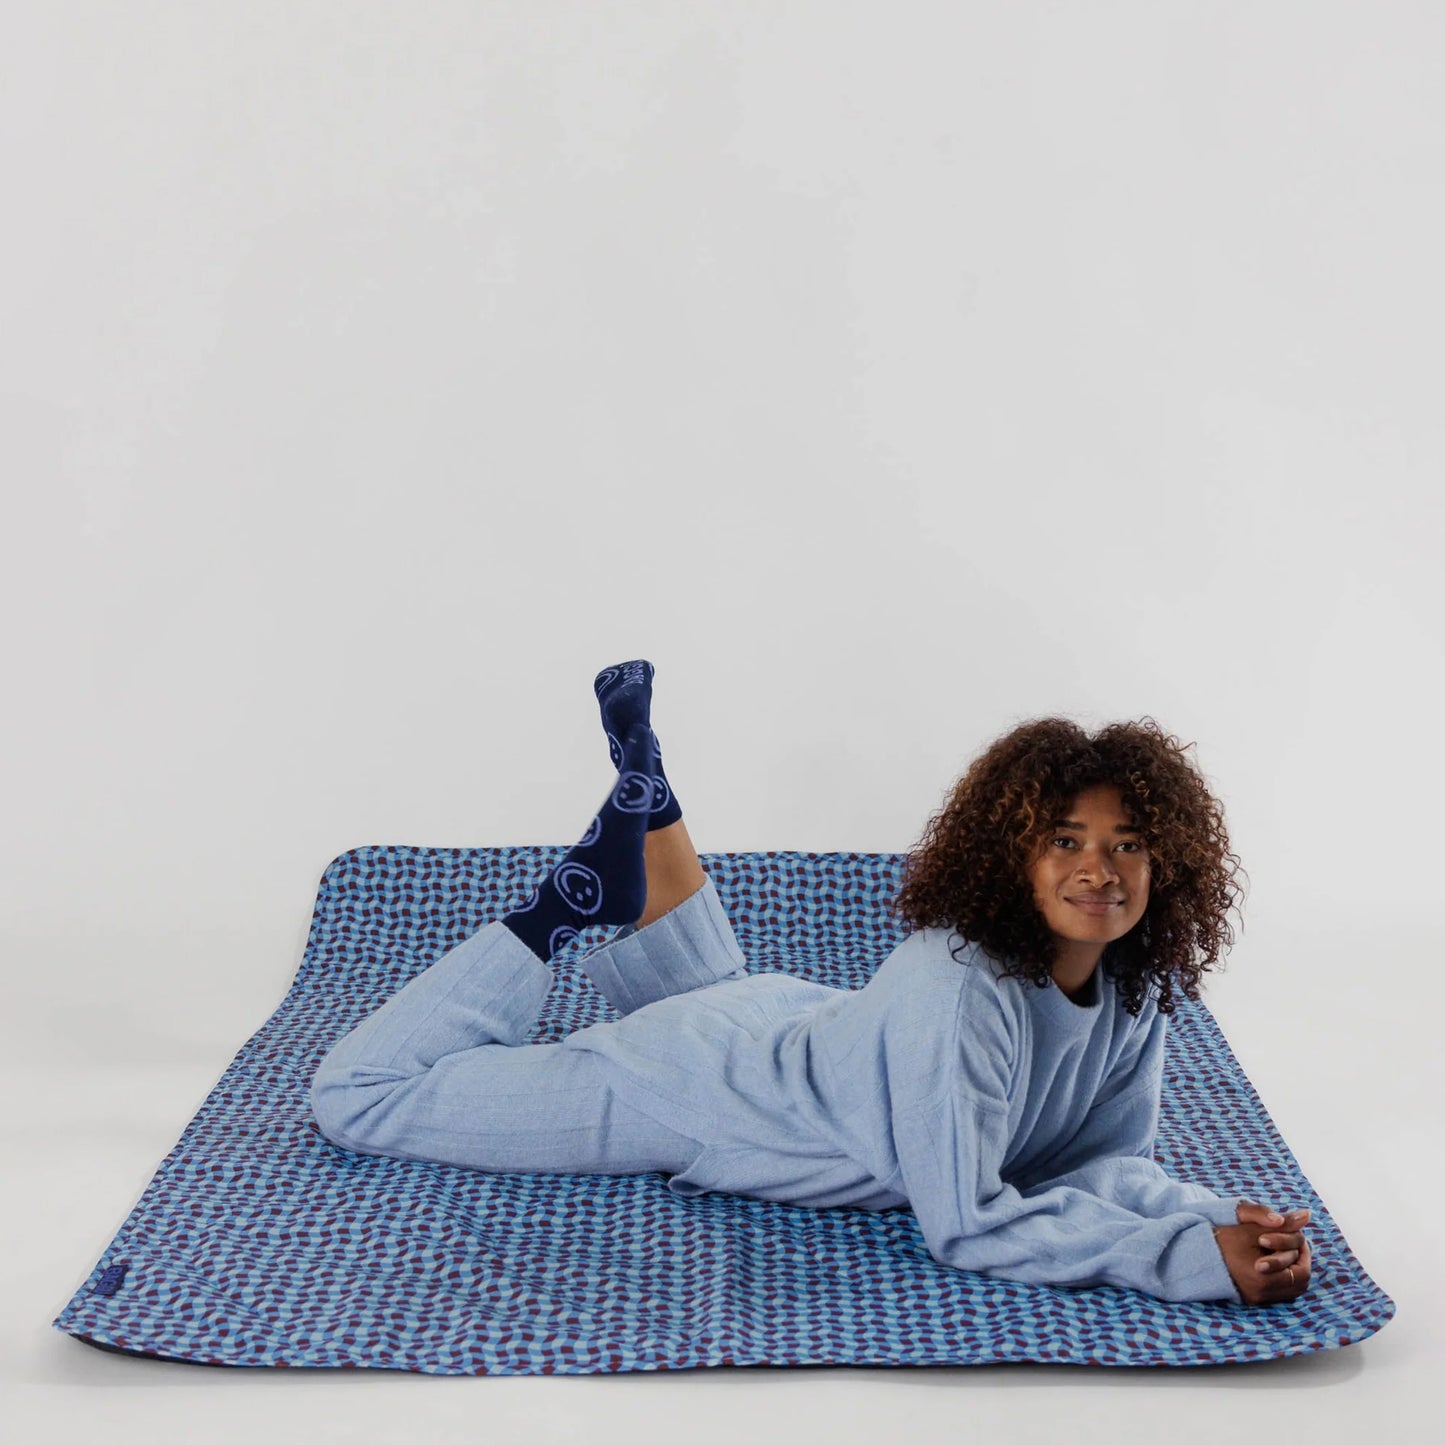 BAGGU Puffy Picnic Blanket: Wavy Gingham Blue